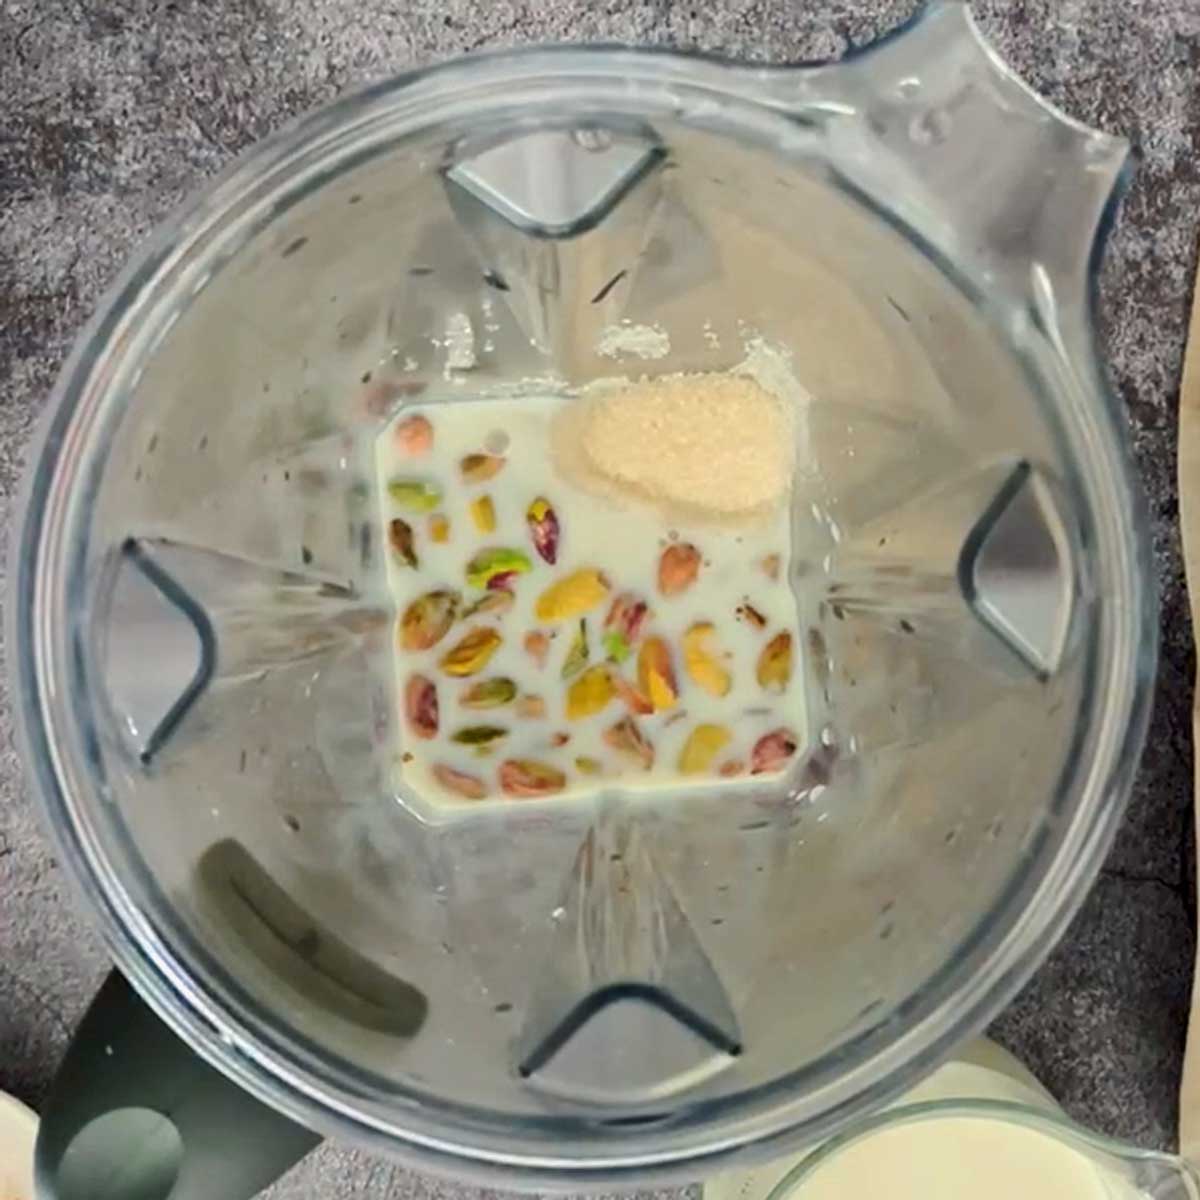 Pistachio ice cream ingredients in a blender.